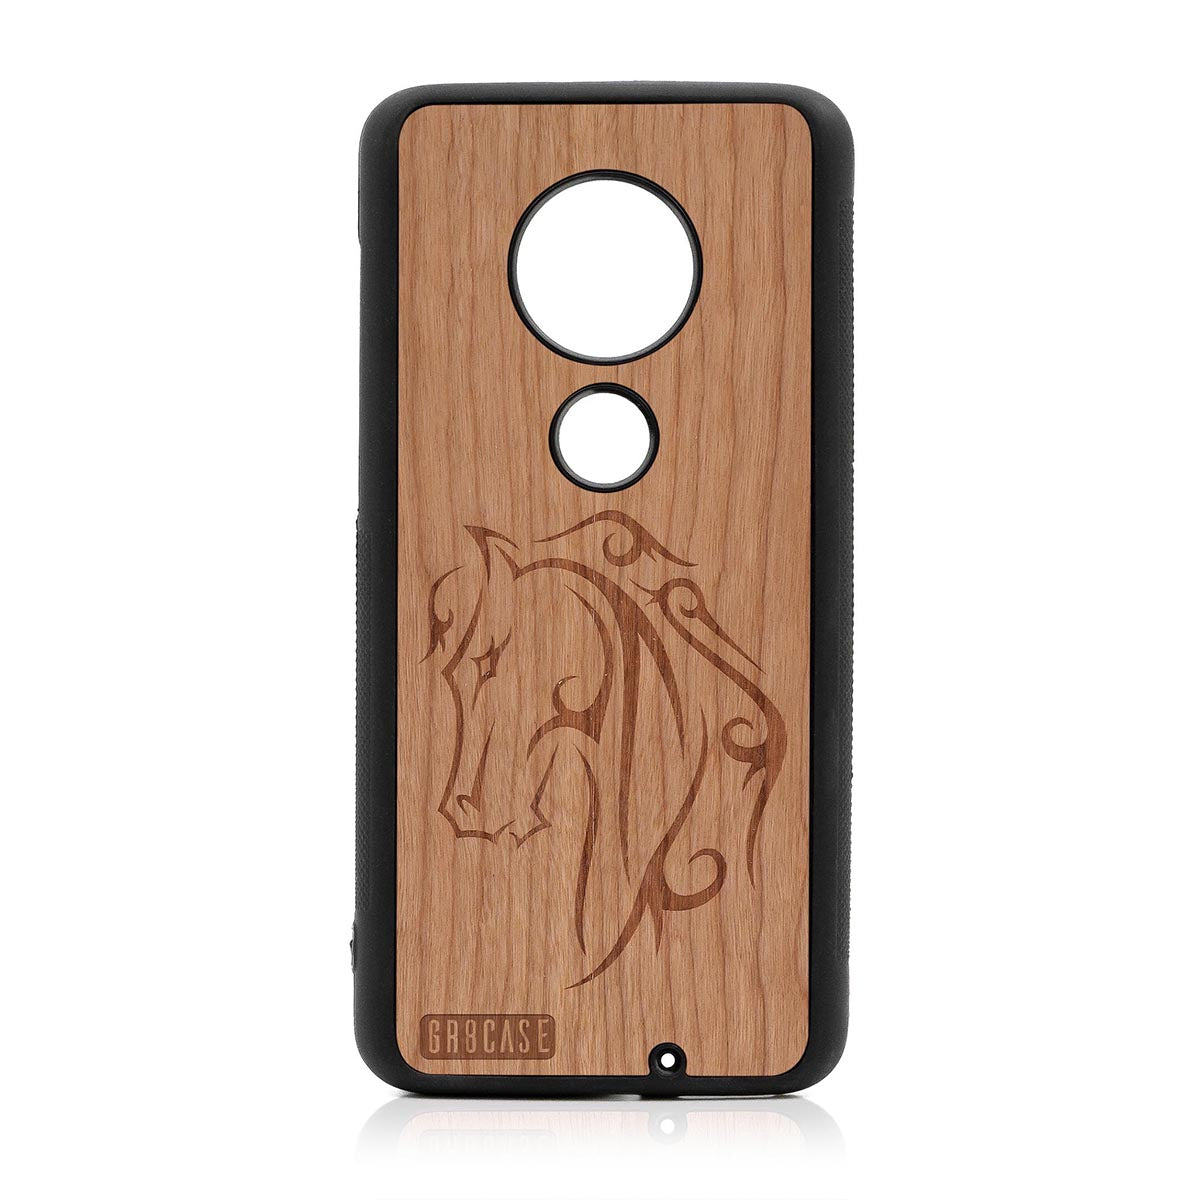 Horse Tattoo Design Wood Case Moto G7 Plus by GR8CASE